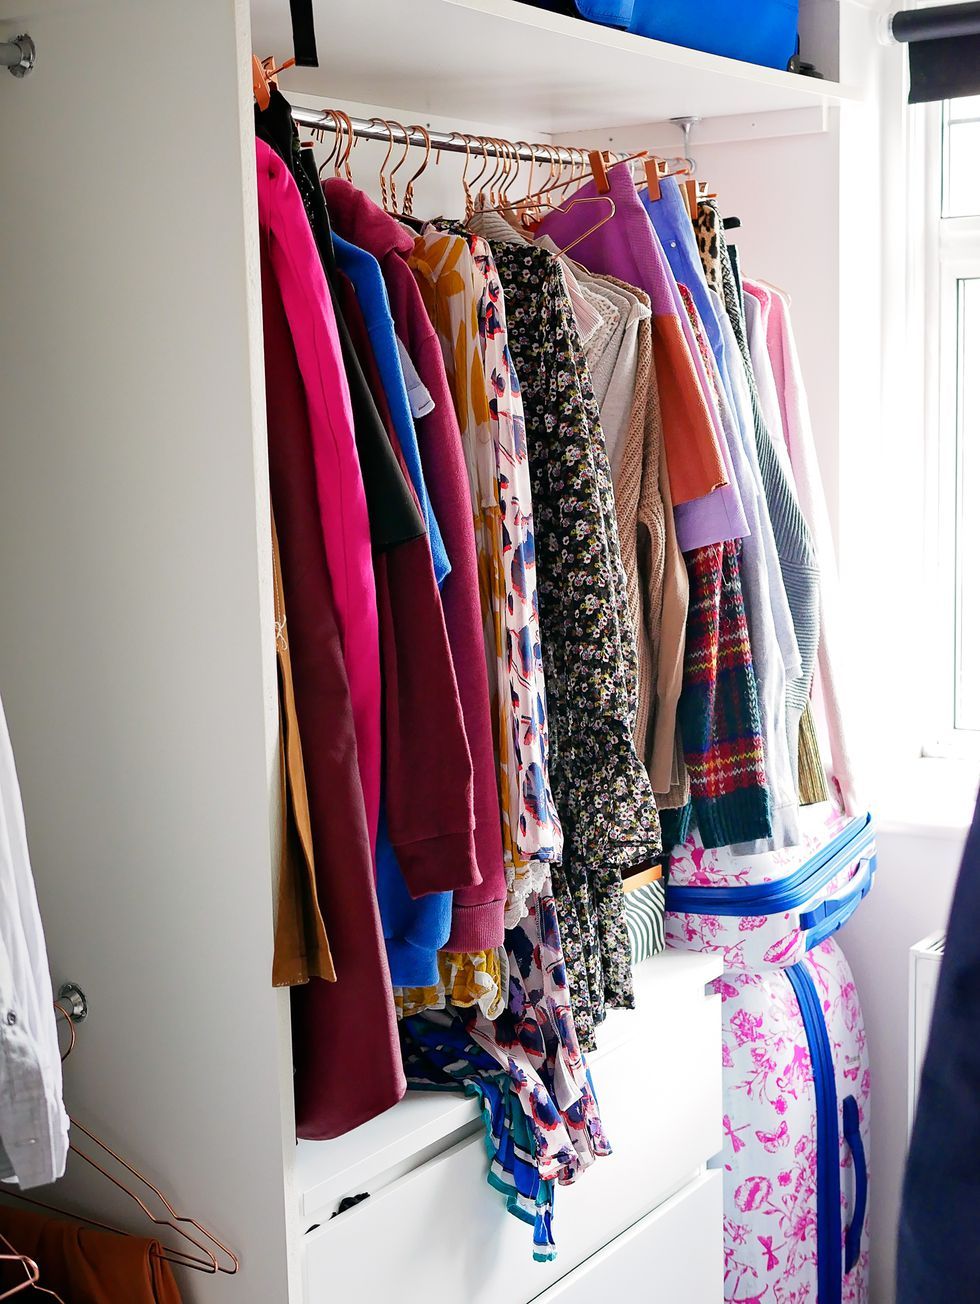 Textile, Room, Clothes hanger, Electric blue, Door, Retail, Closet, Home accessories, Fashion design, Collection, 